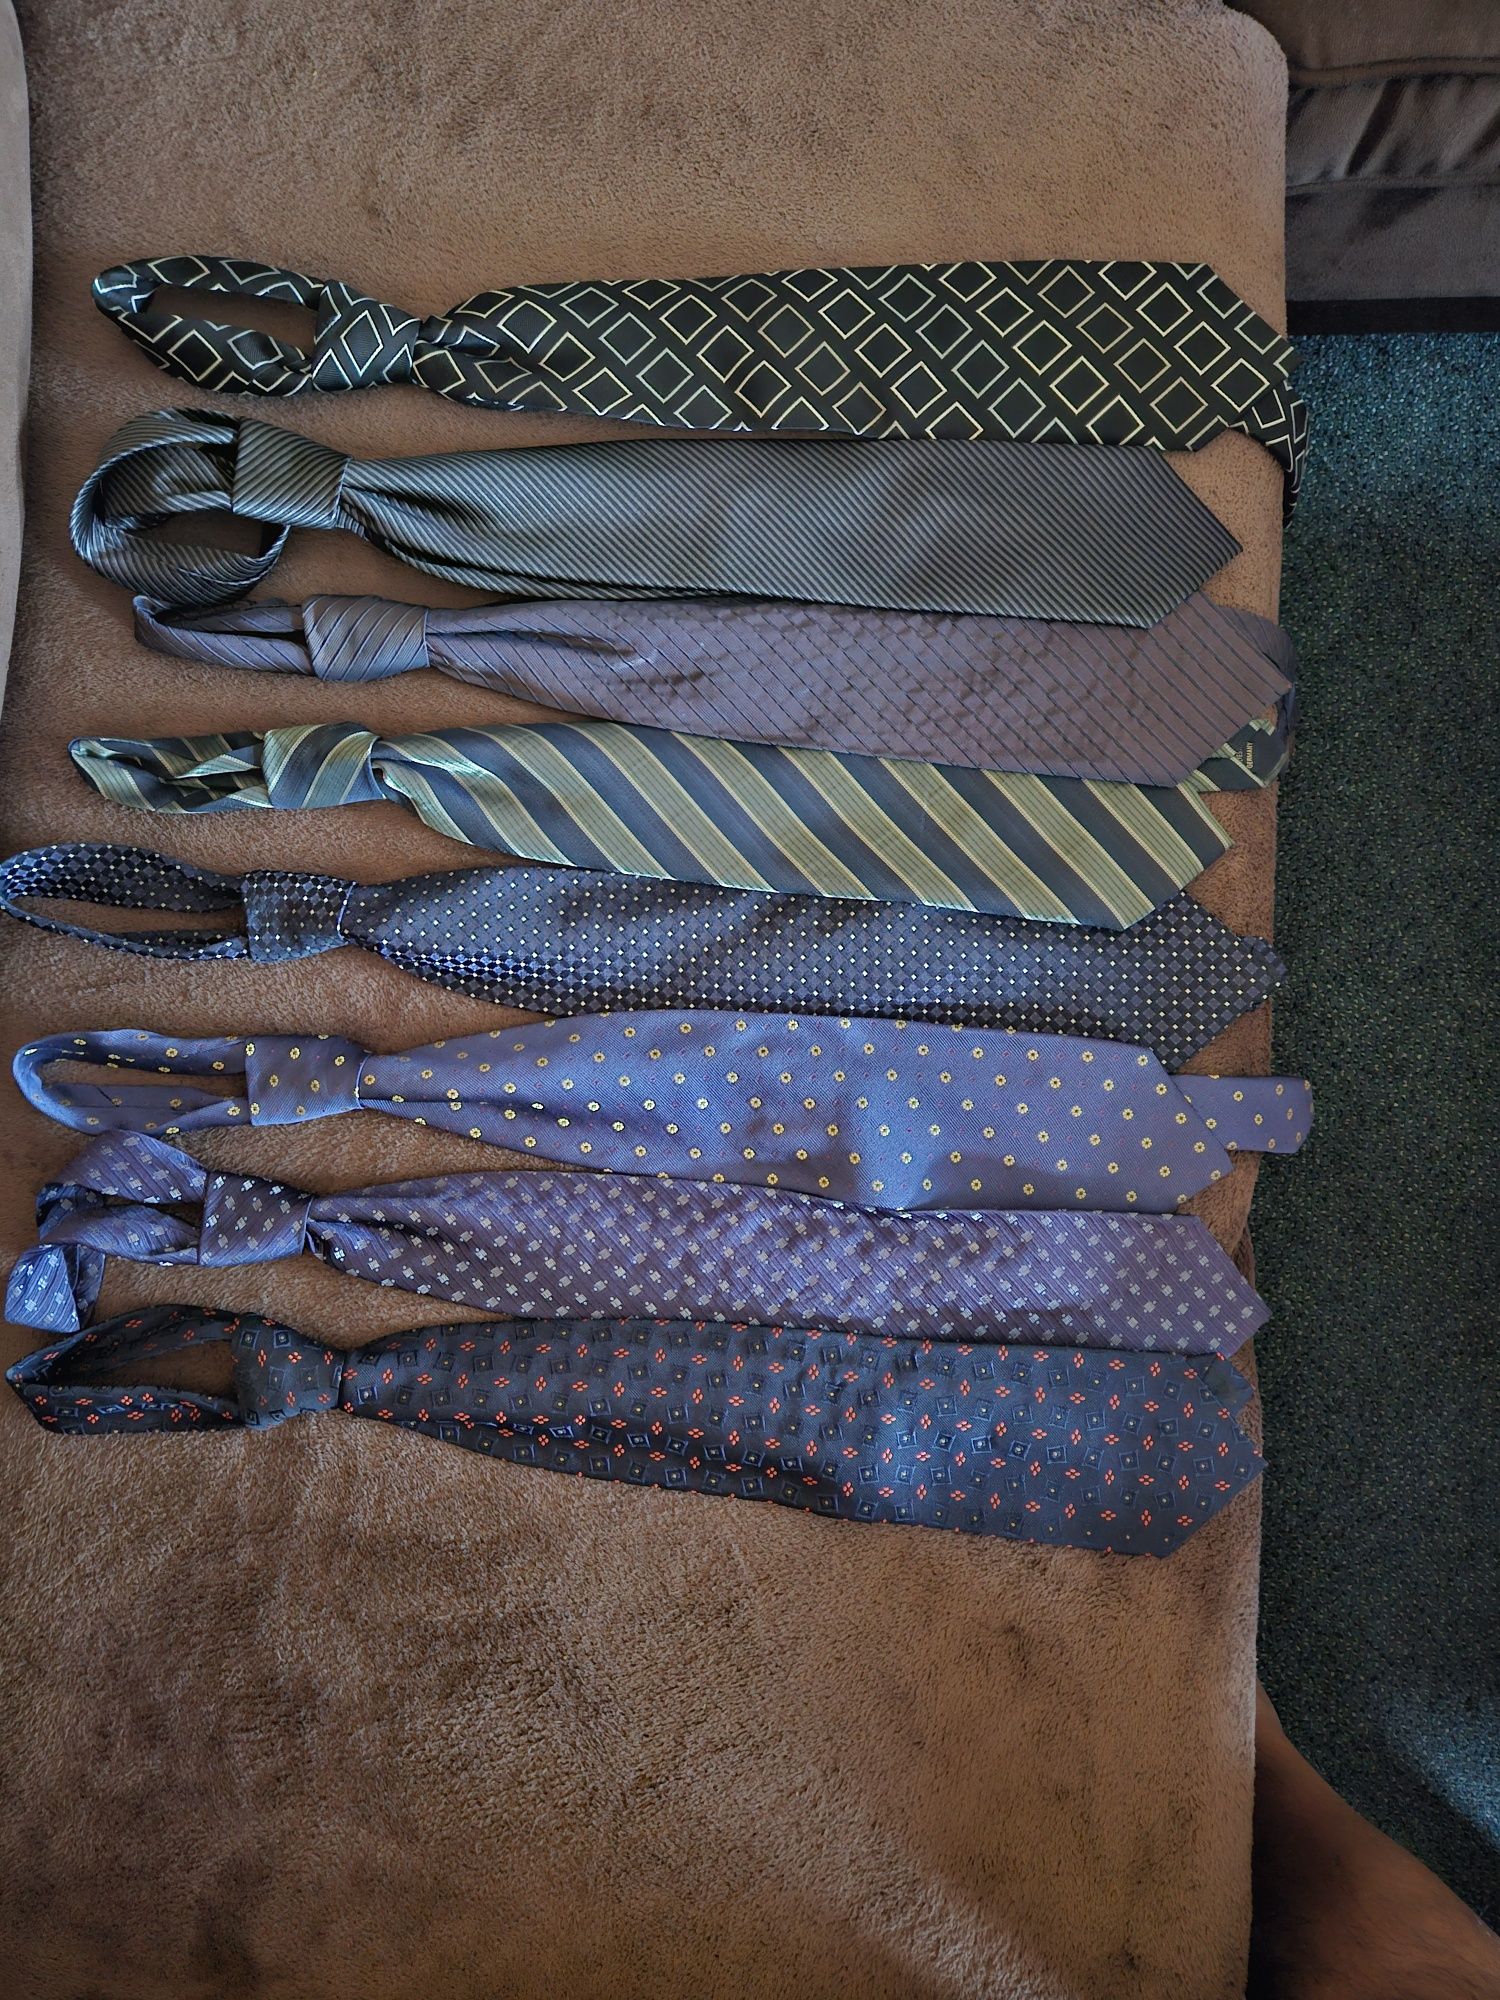 Krawaty-markowe- kolekcja 24 sztuki.